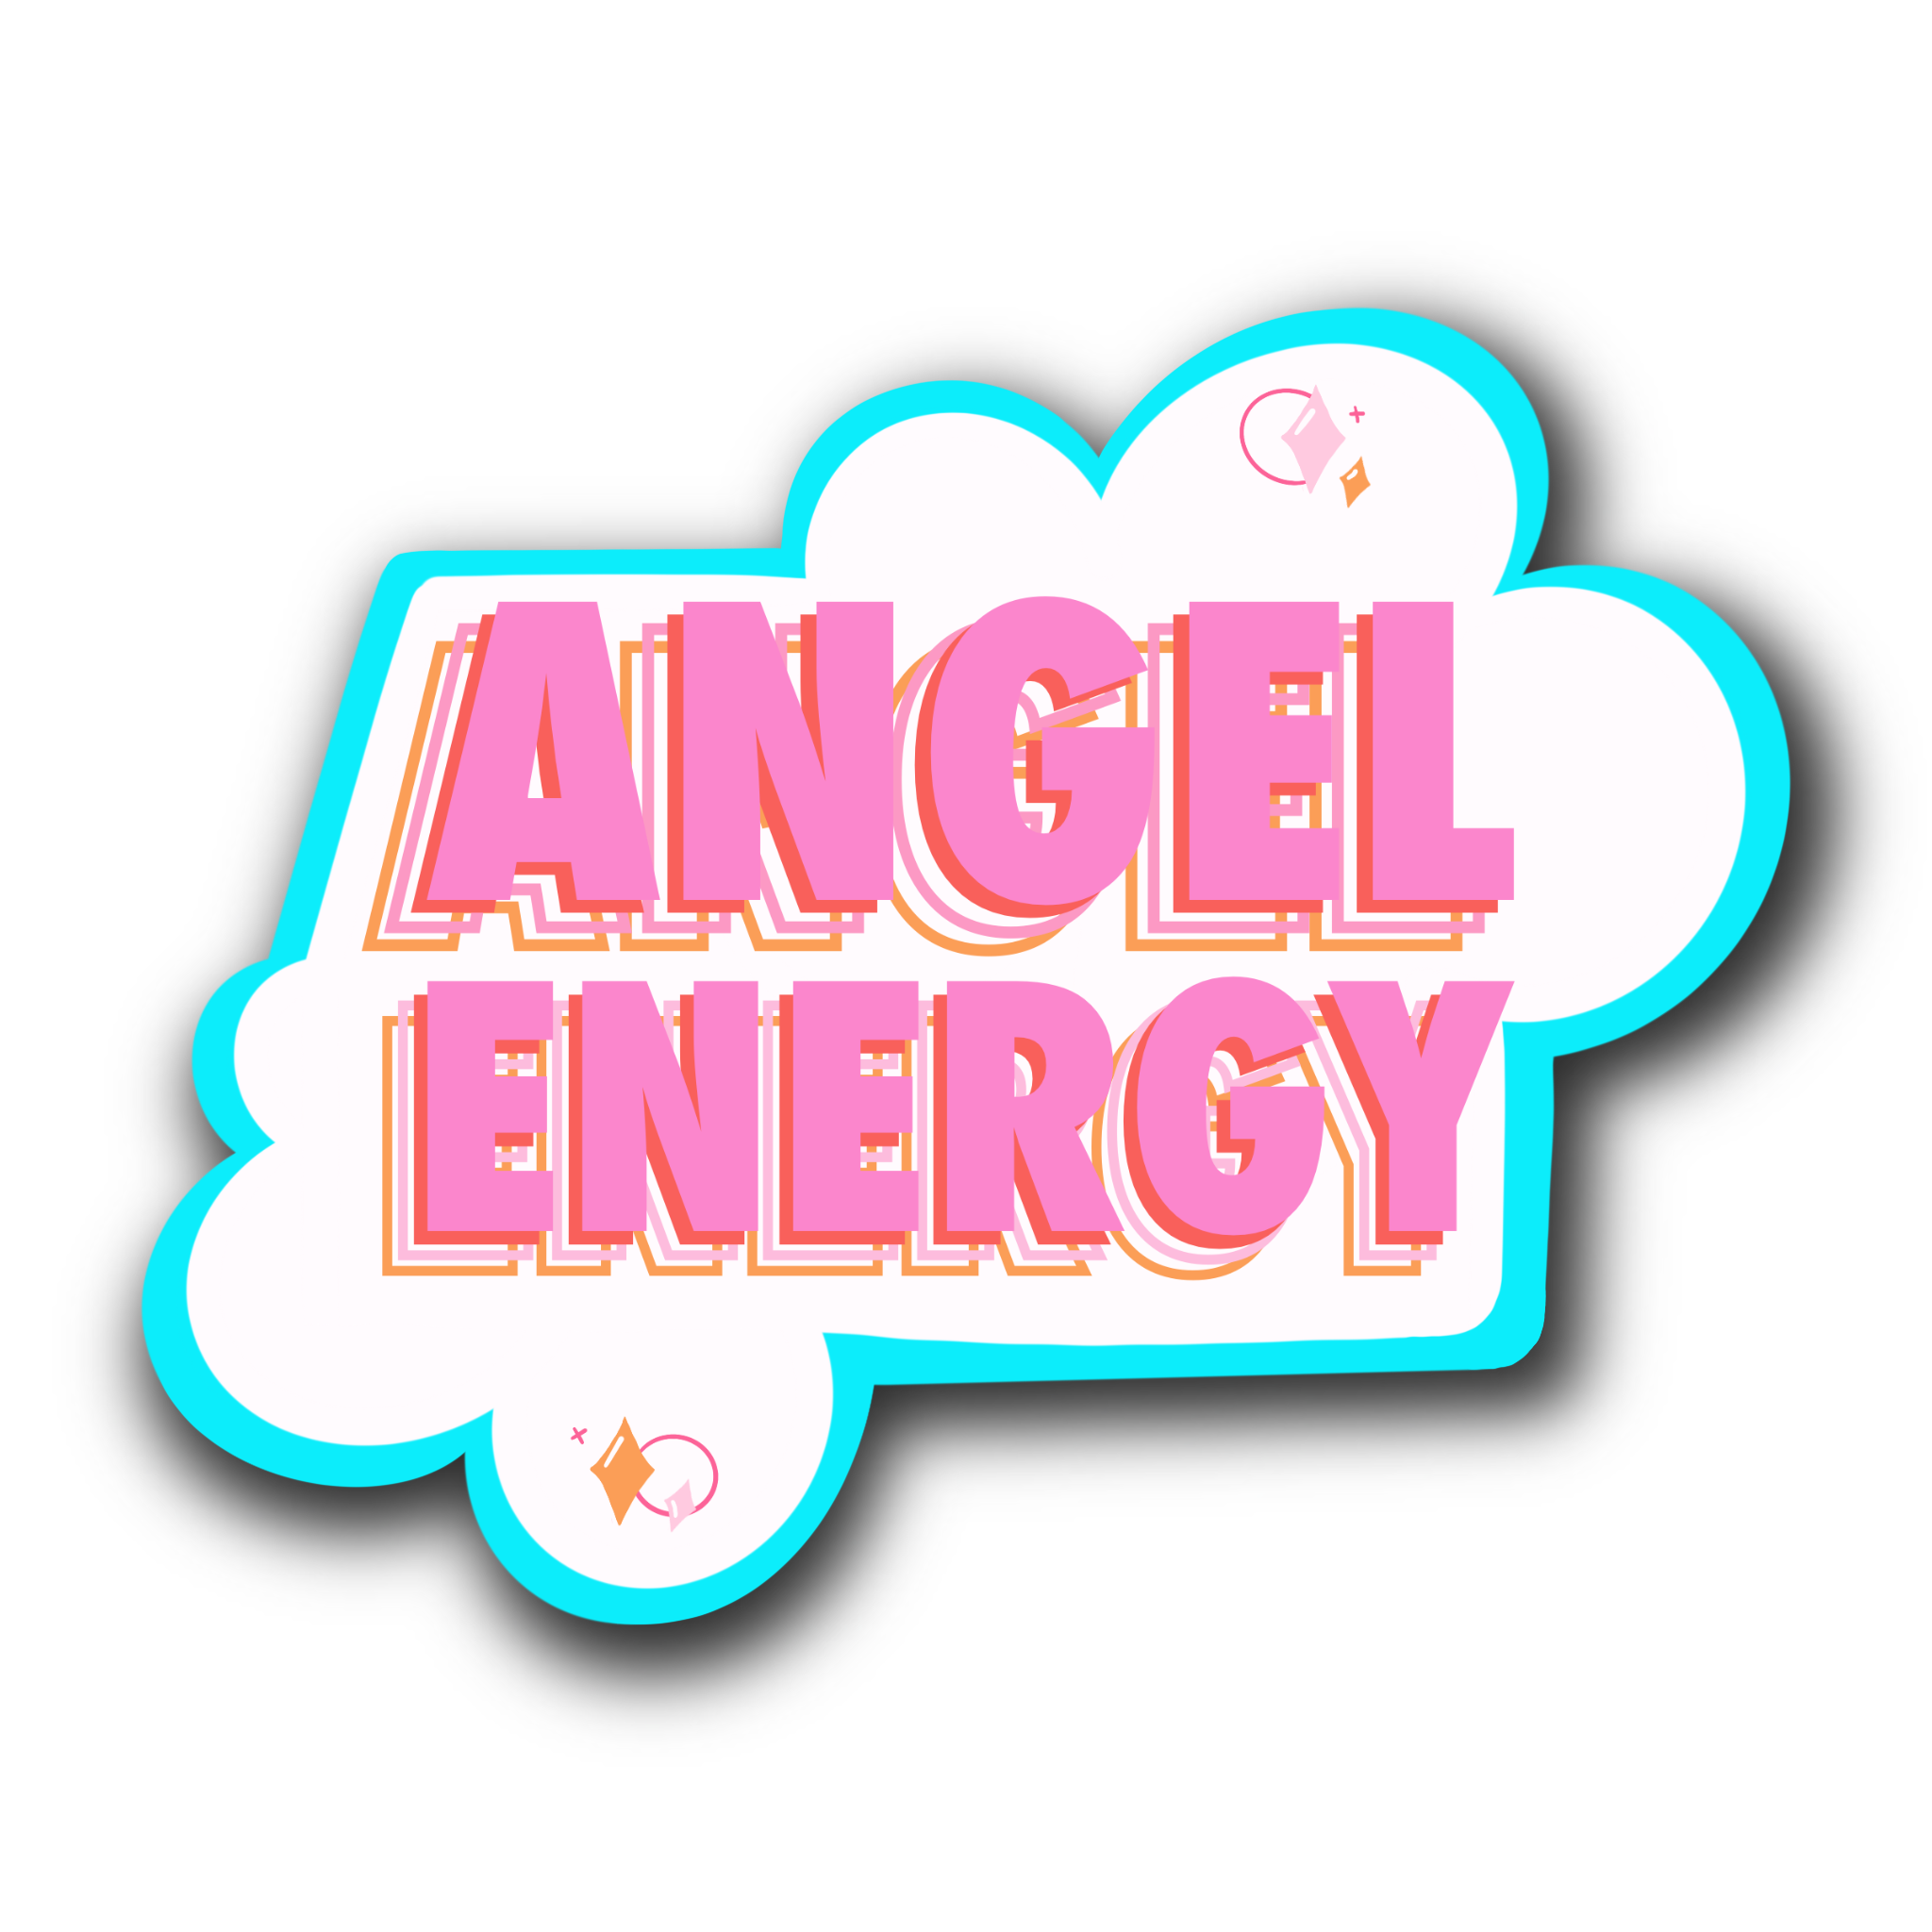 Angel Energy Sticker